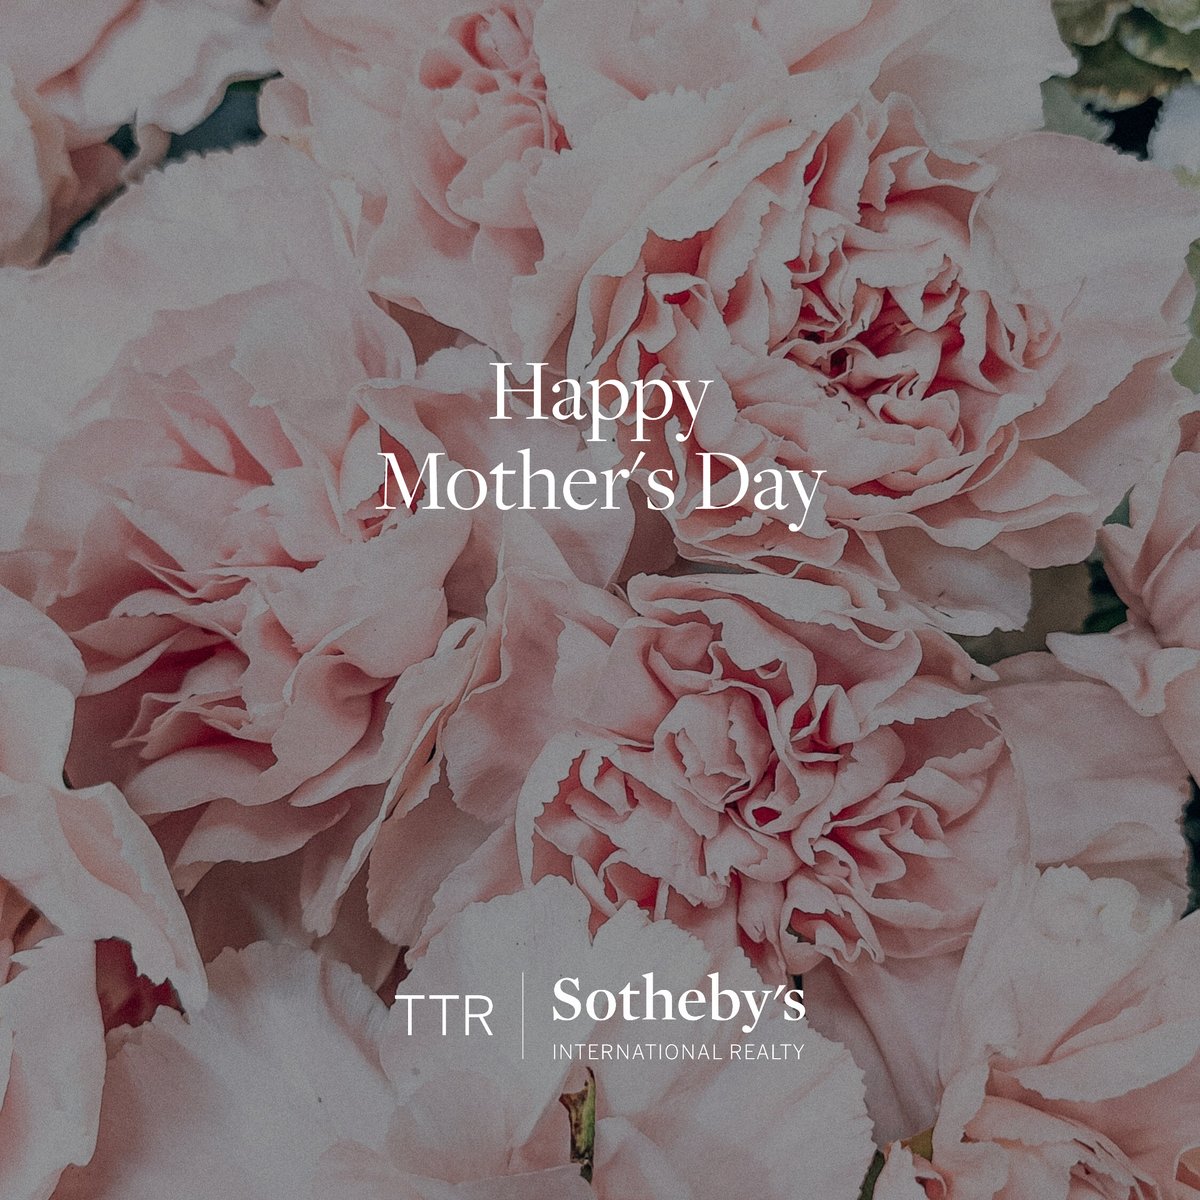 Happy Mother's Day 🩷

📱 410.924.4814
☎️ 410.673.3344
kathy.christensen@sothebysrealty.com
kathychristensen.com
.
.
.
.
.
#realestate #luxuryhomes #waterfront #easternshoremd #ttrsir